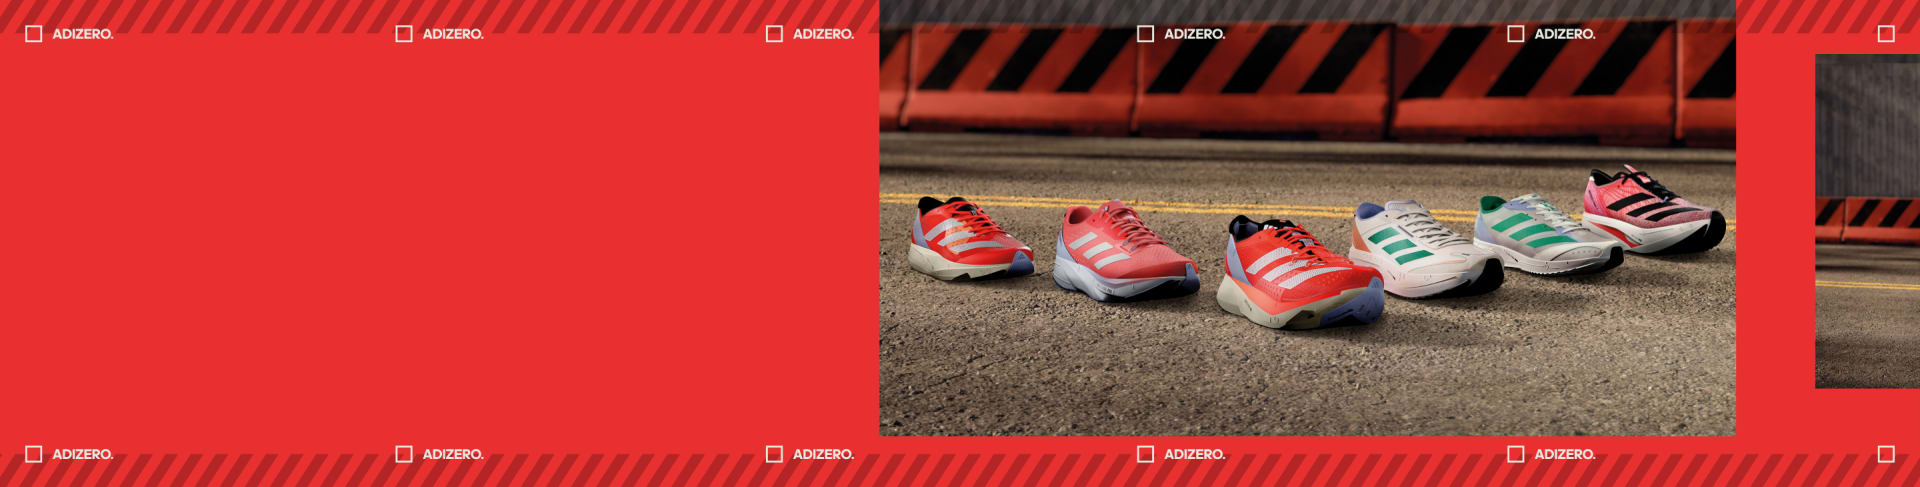 Image showing all of the adidas Adizero Family: The Adios Pro 3, Boston 11, Adios 7, Prime X Strung, Takumi Sen 9 and Adizero SL